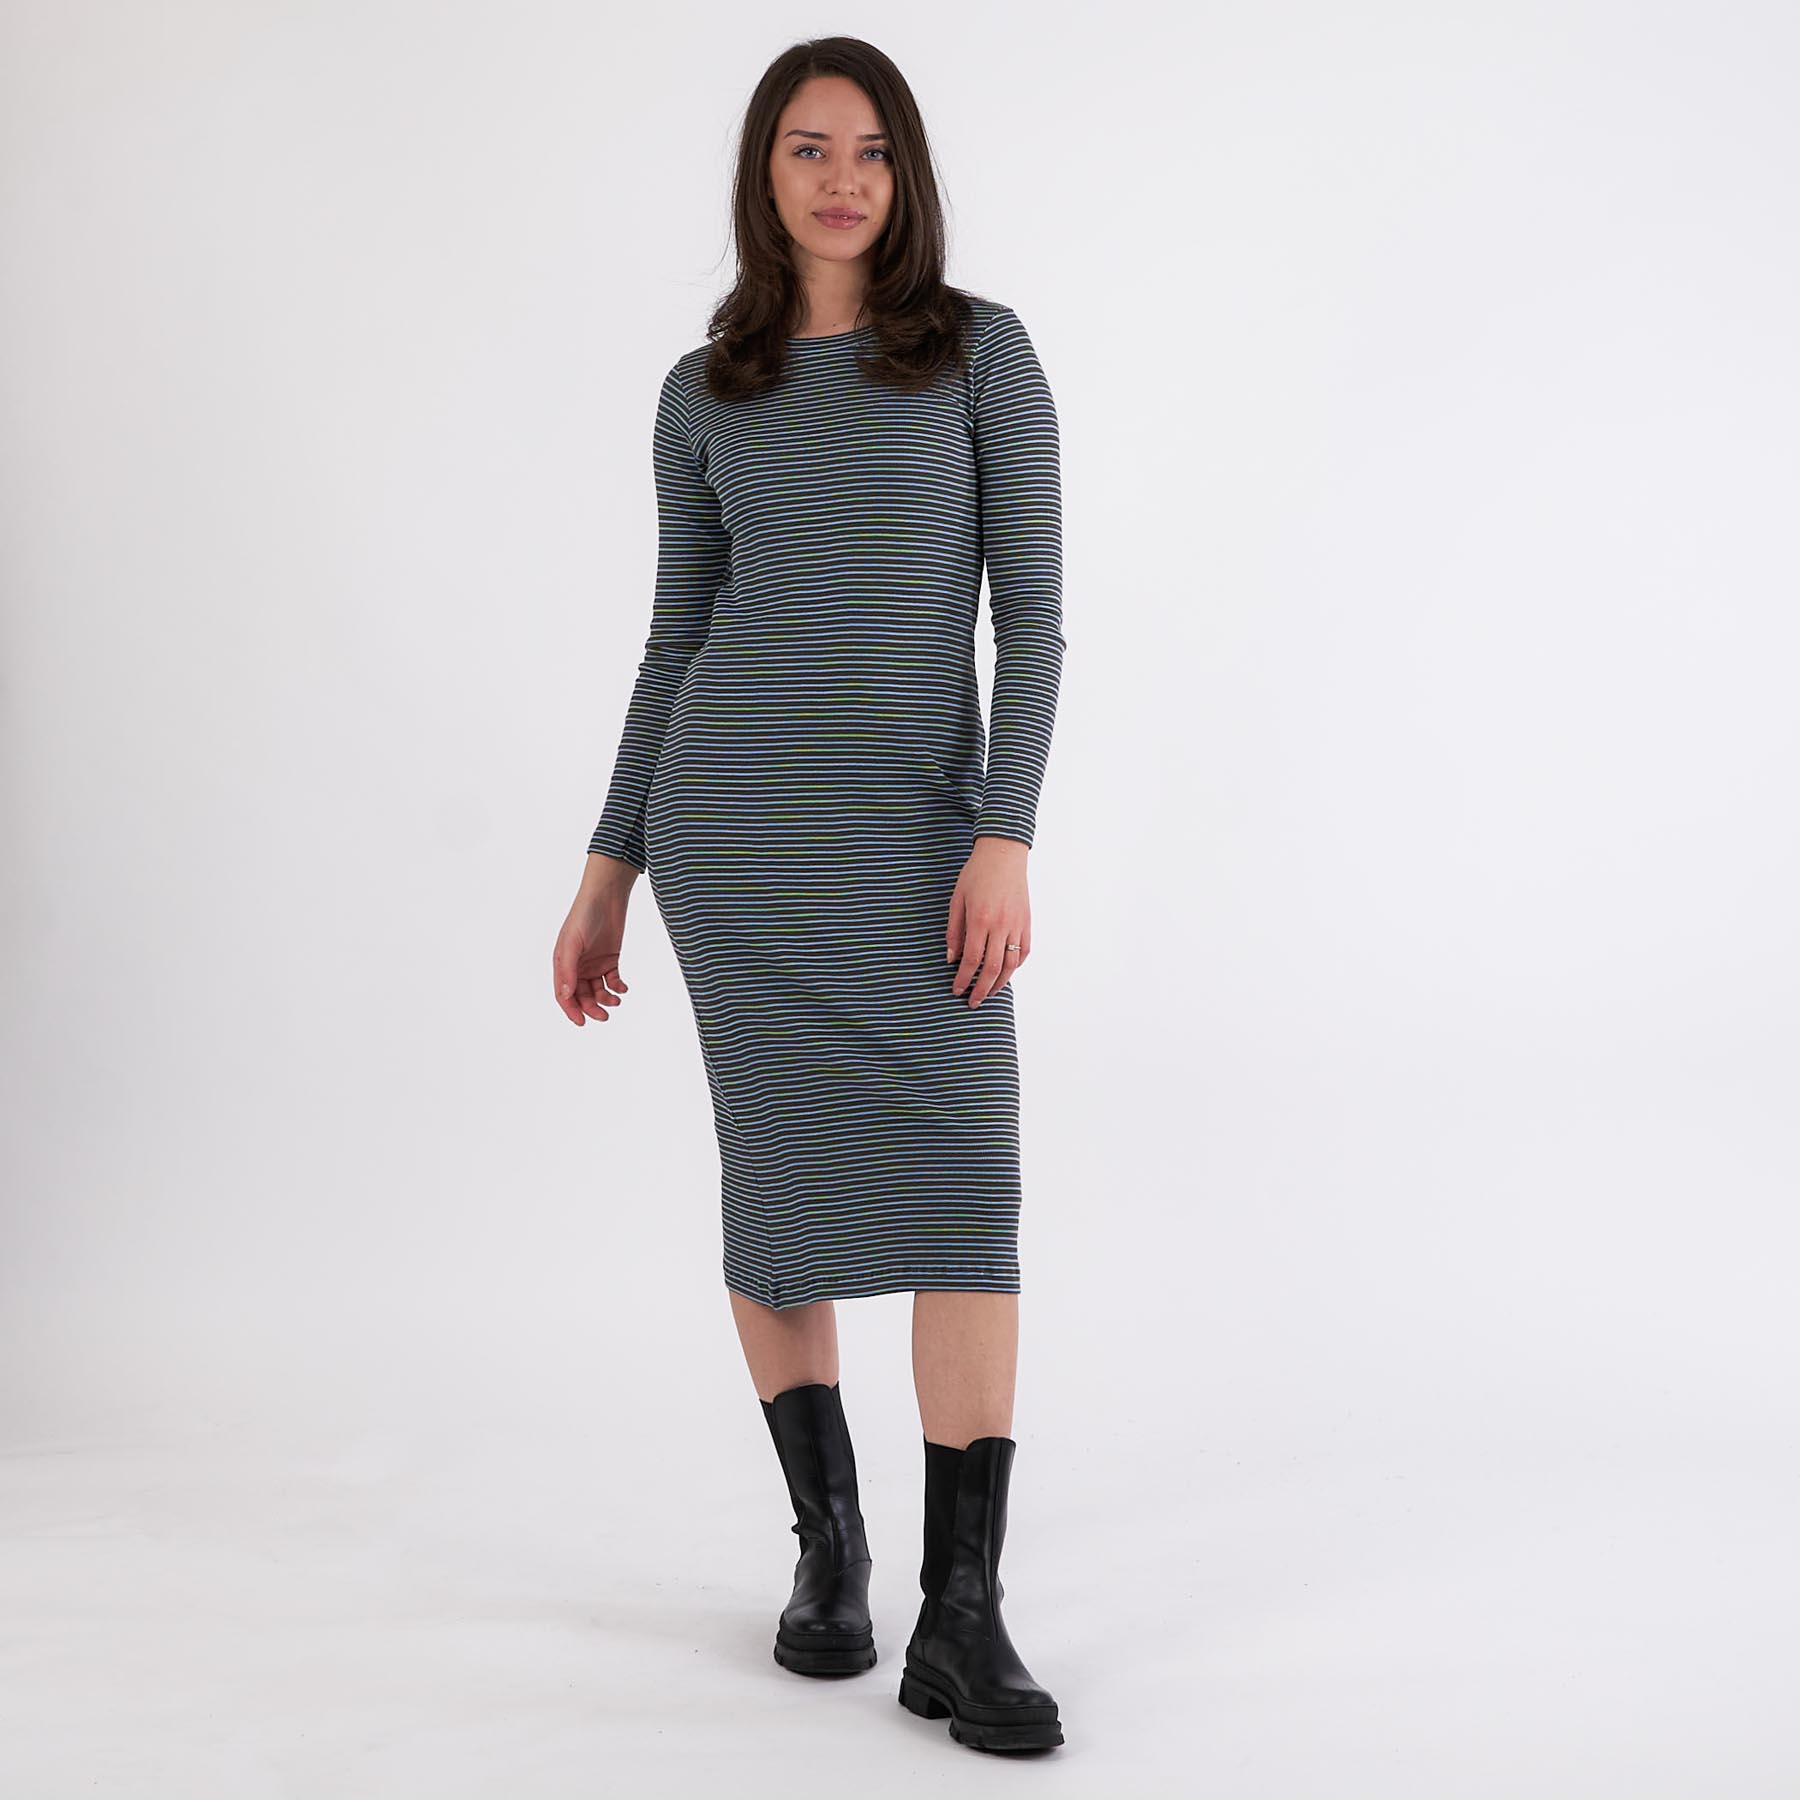 Nørgaard – 2×2 cotton stripe duba dress – Kjoler til hende – FOREST NIGHT/DELLA R – L